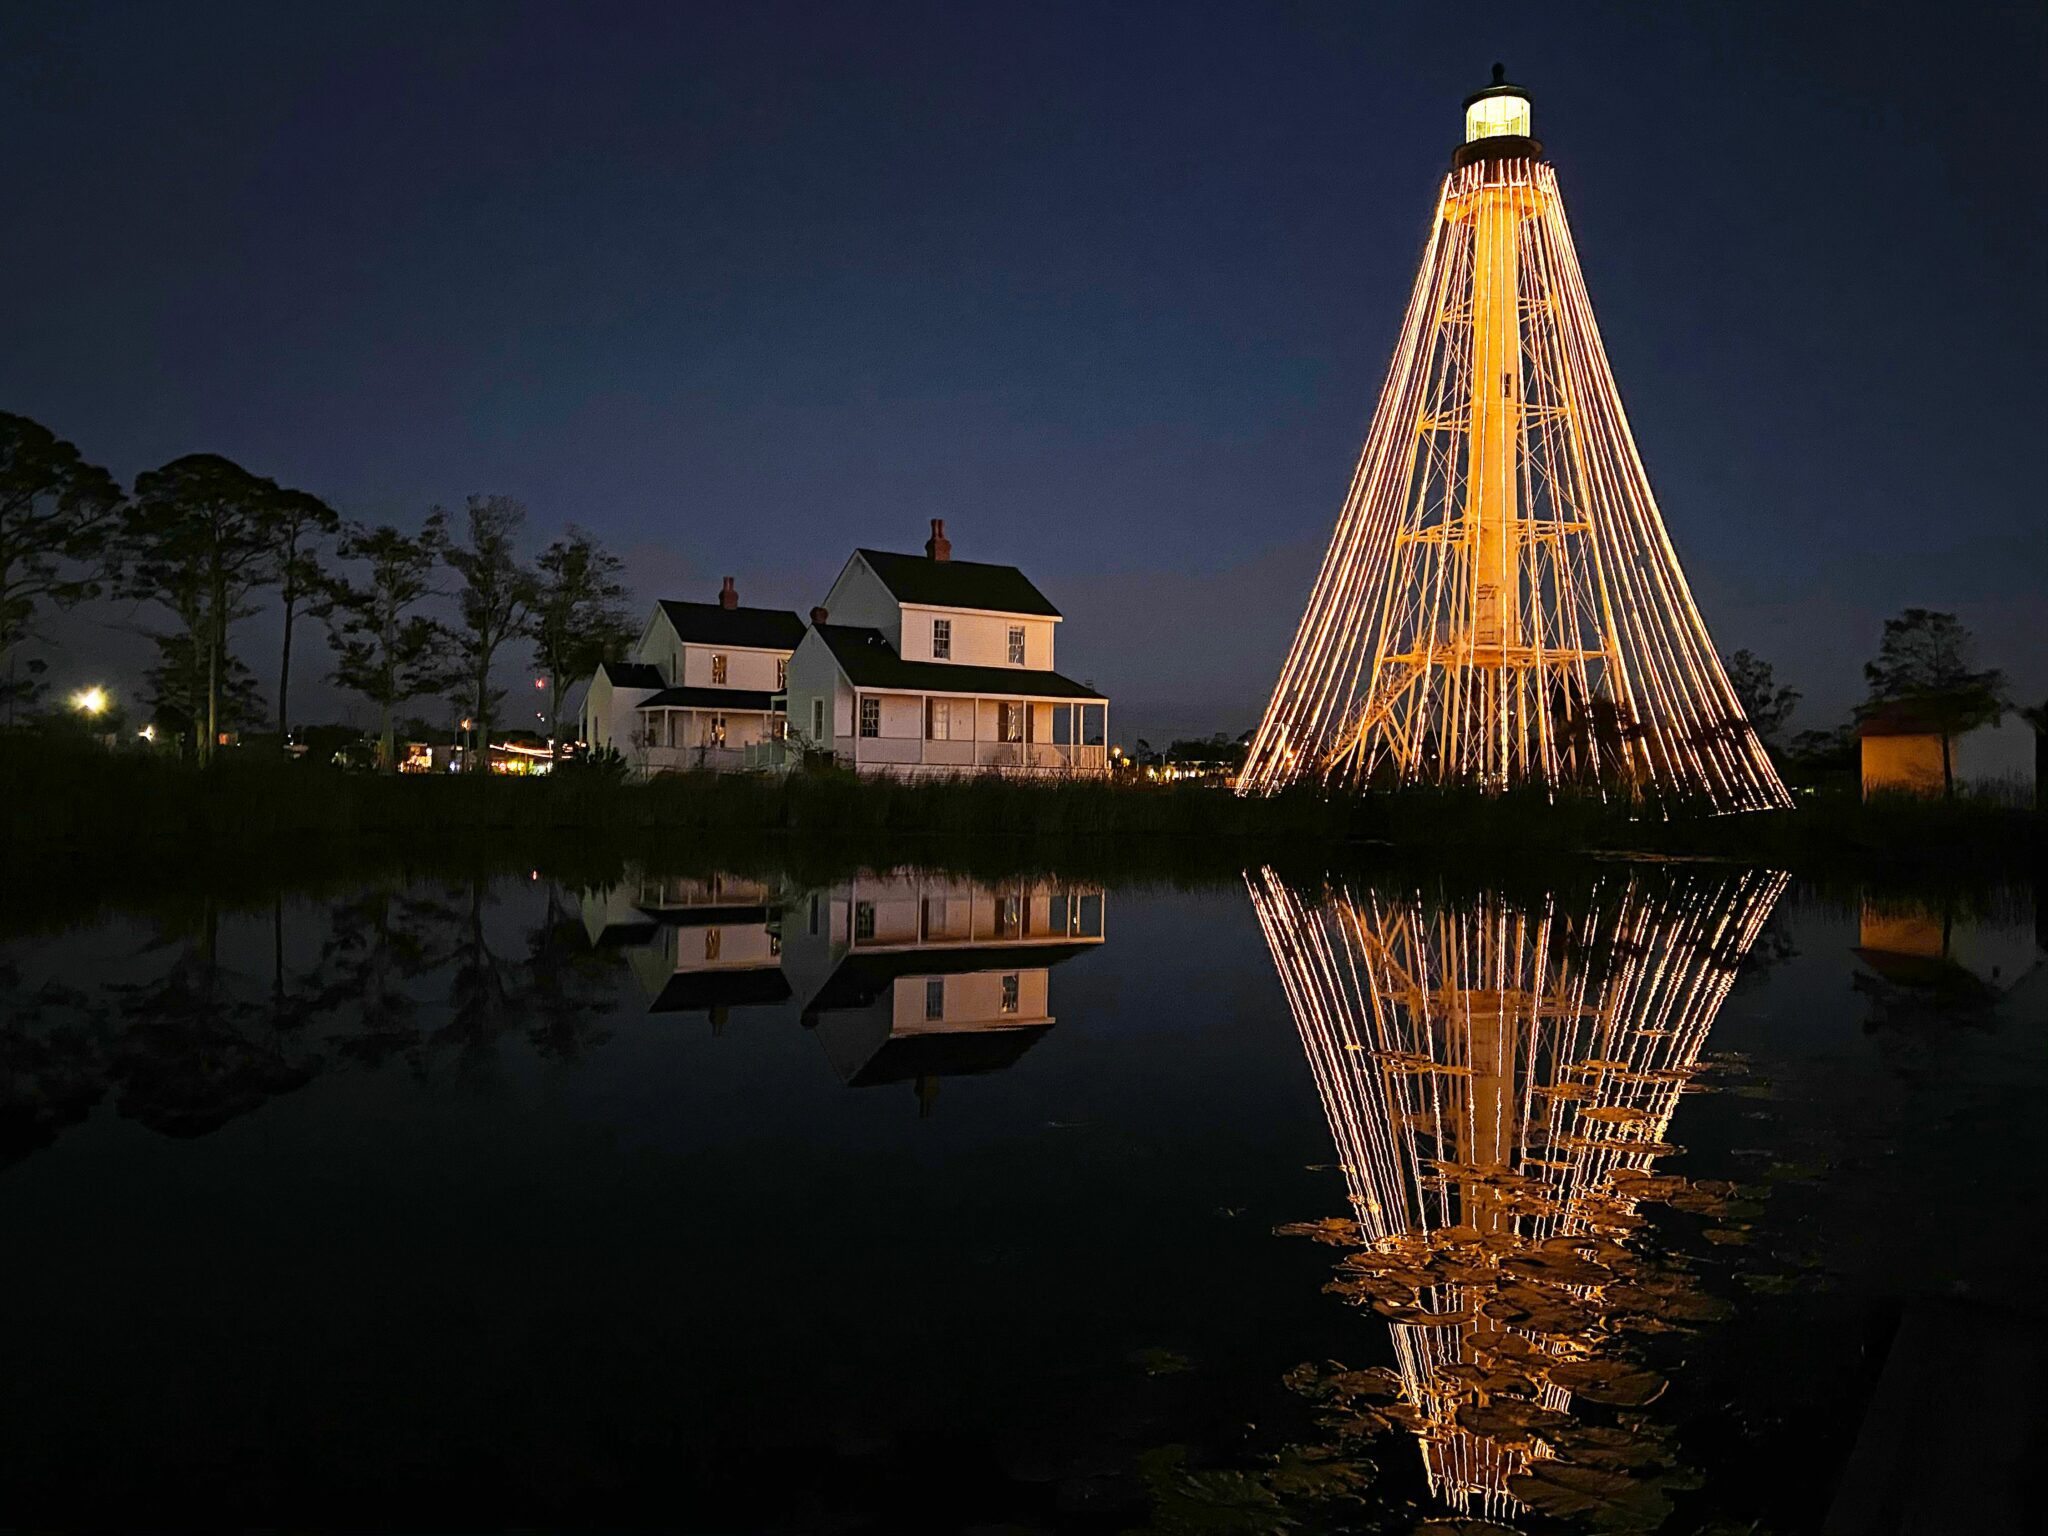 Port St. Joe light house with Christmas lights, at night.